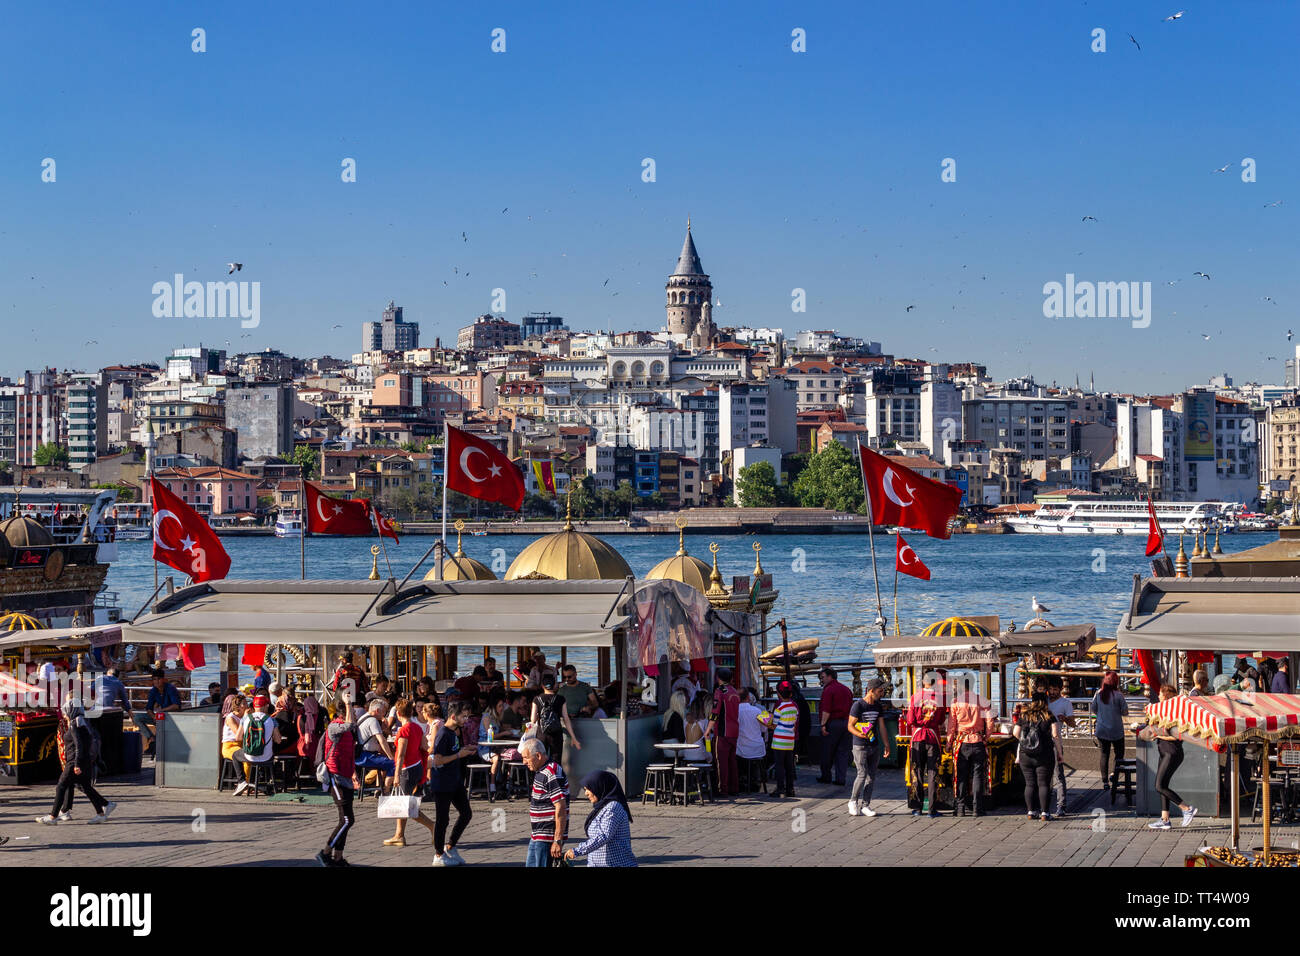 Istanbul, Eminonu / Turkey - May 30 2019: Istanbul landscape, Eminonu and Halic seaside, Galata Tower view. Populer touristic destination historic pen Stock Photo